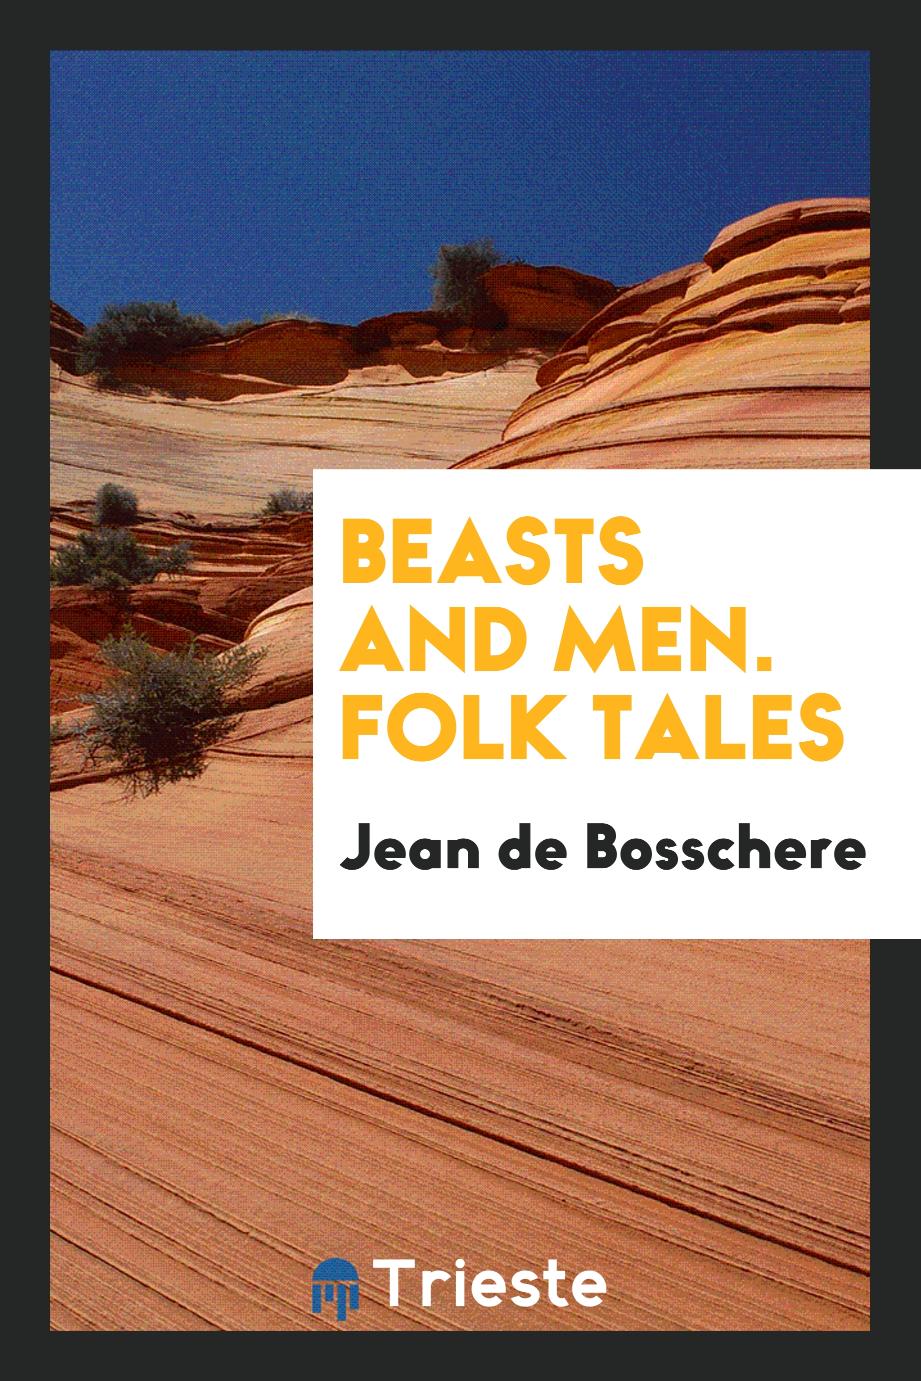 Beasts and men. Folk tales